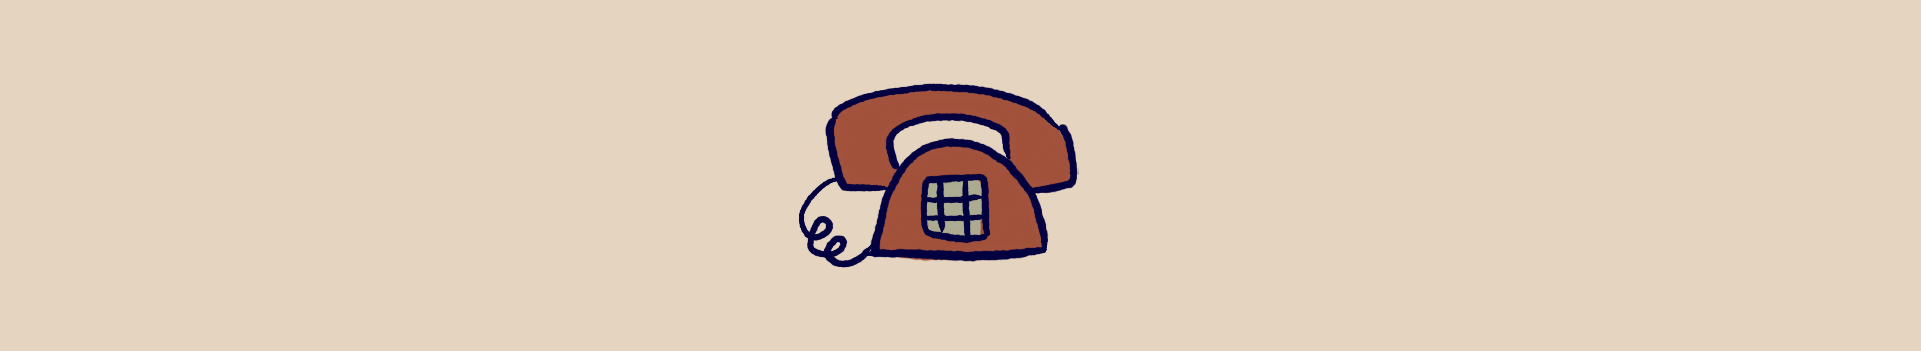 Telephone Toad